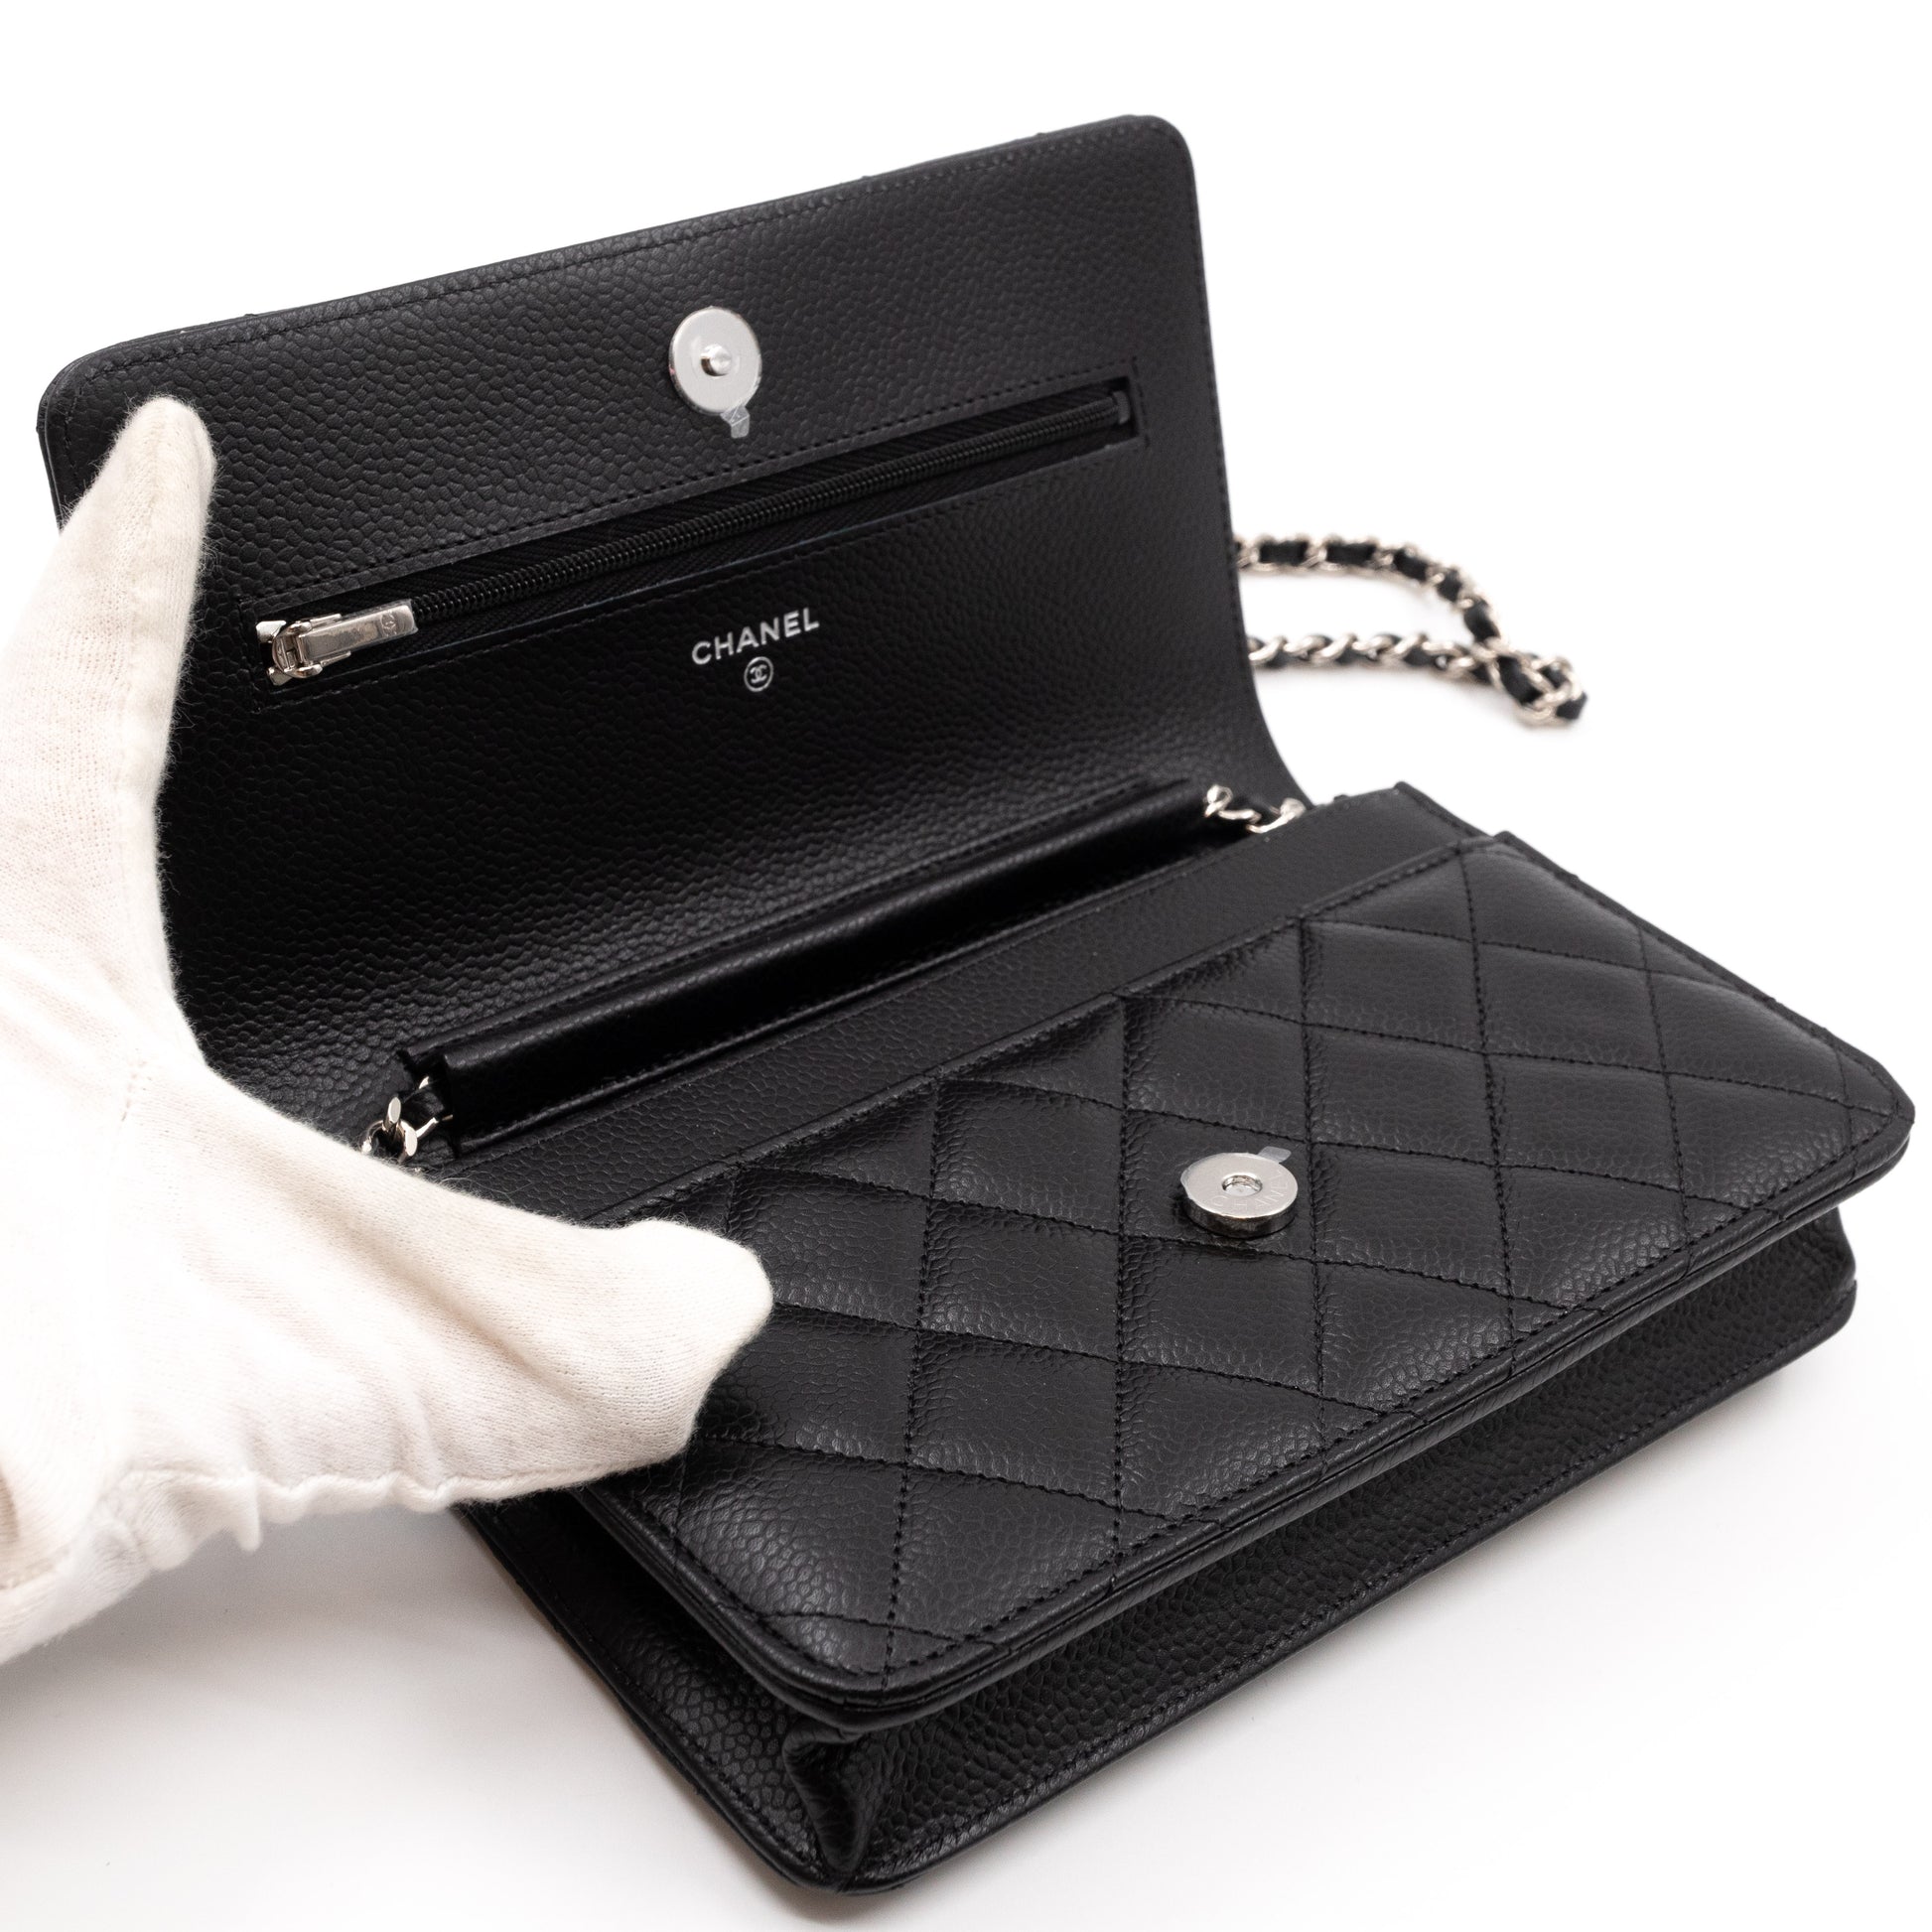 19 LNIB Chanel Classic Long Wallet Black Caviar SHW